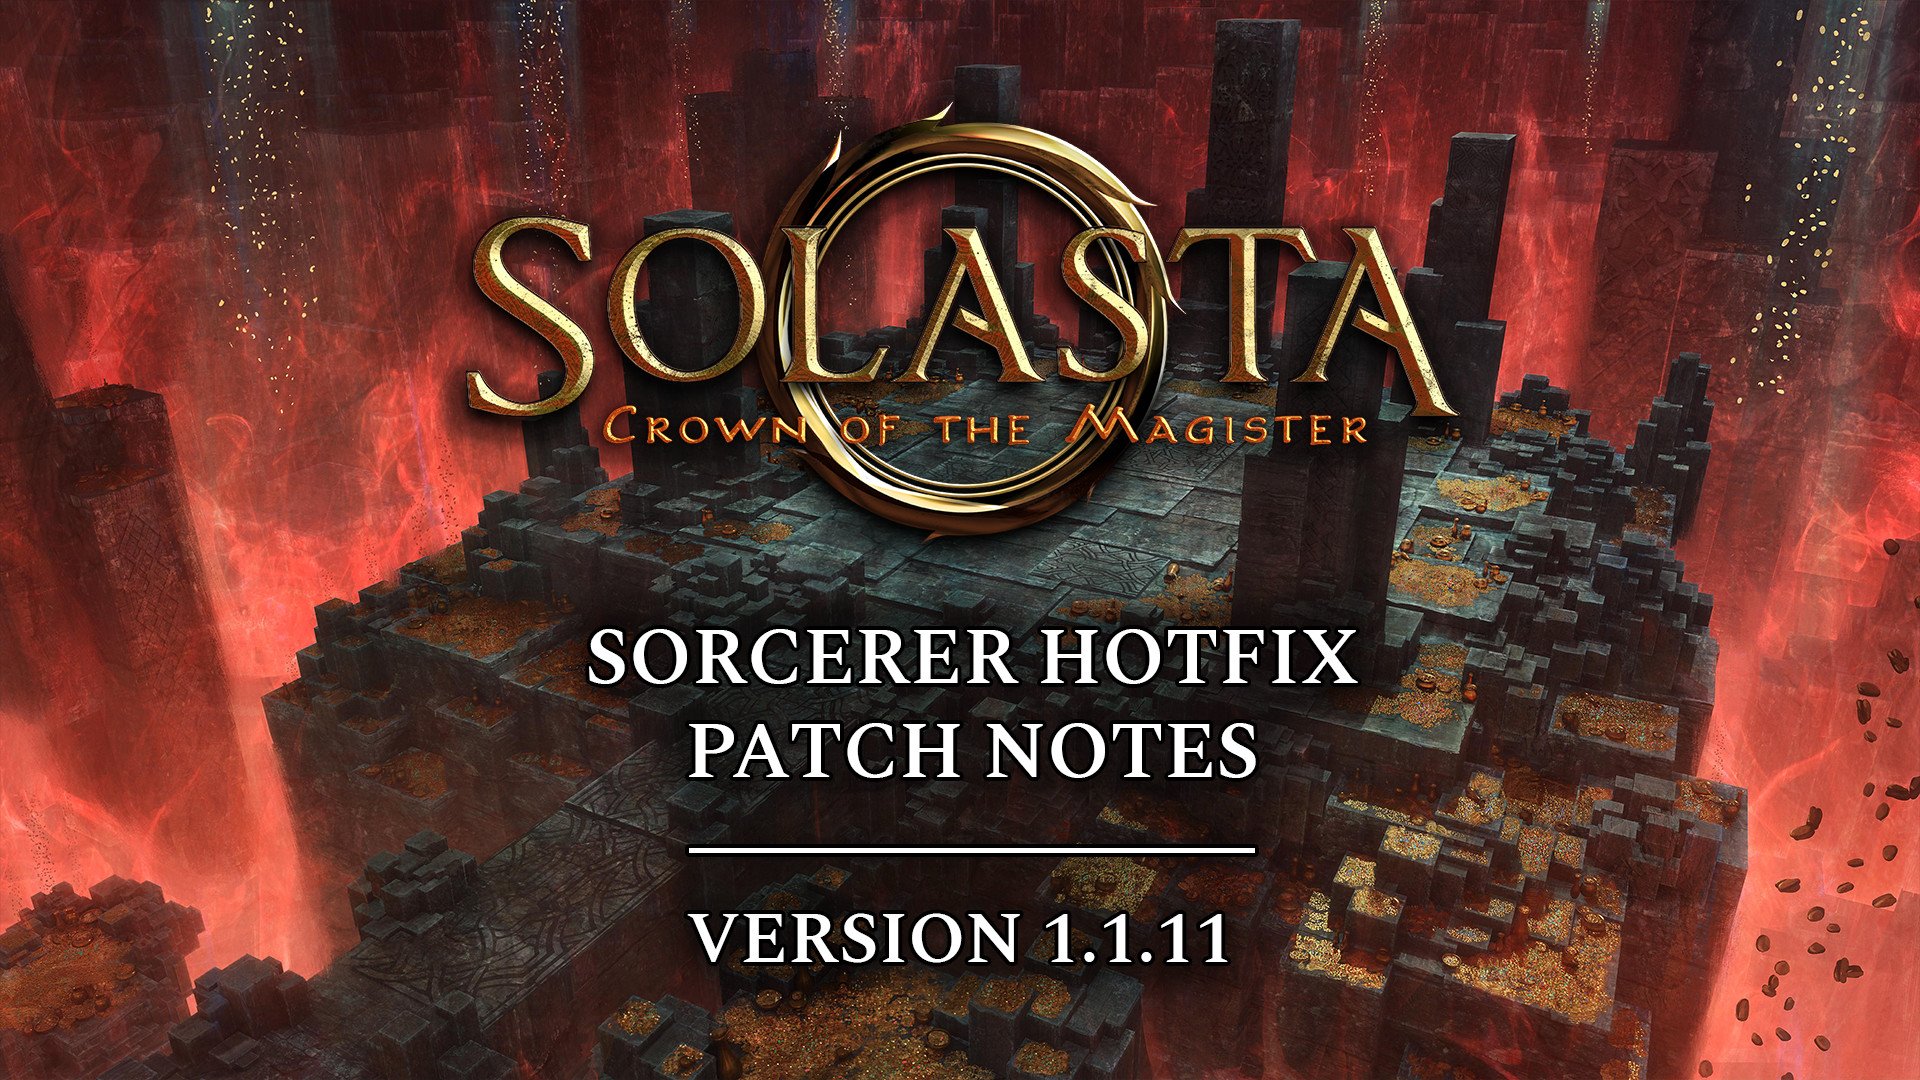 Solasta Hotfix 1.1.11 Patch Notes & KS Digital Rewards sent!